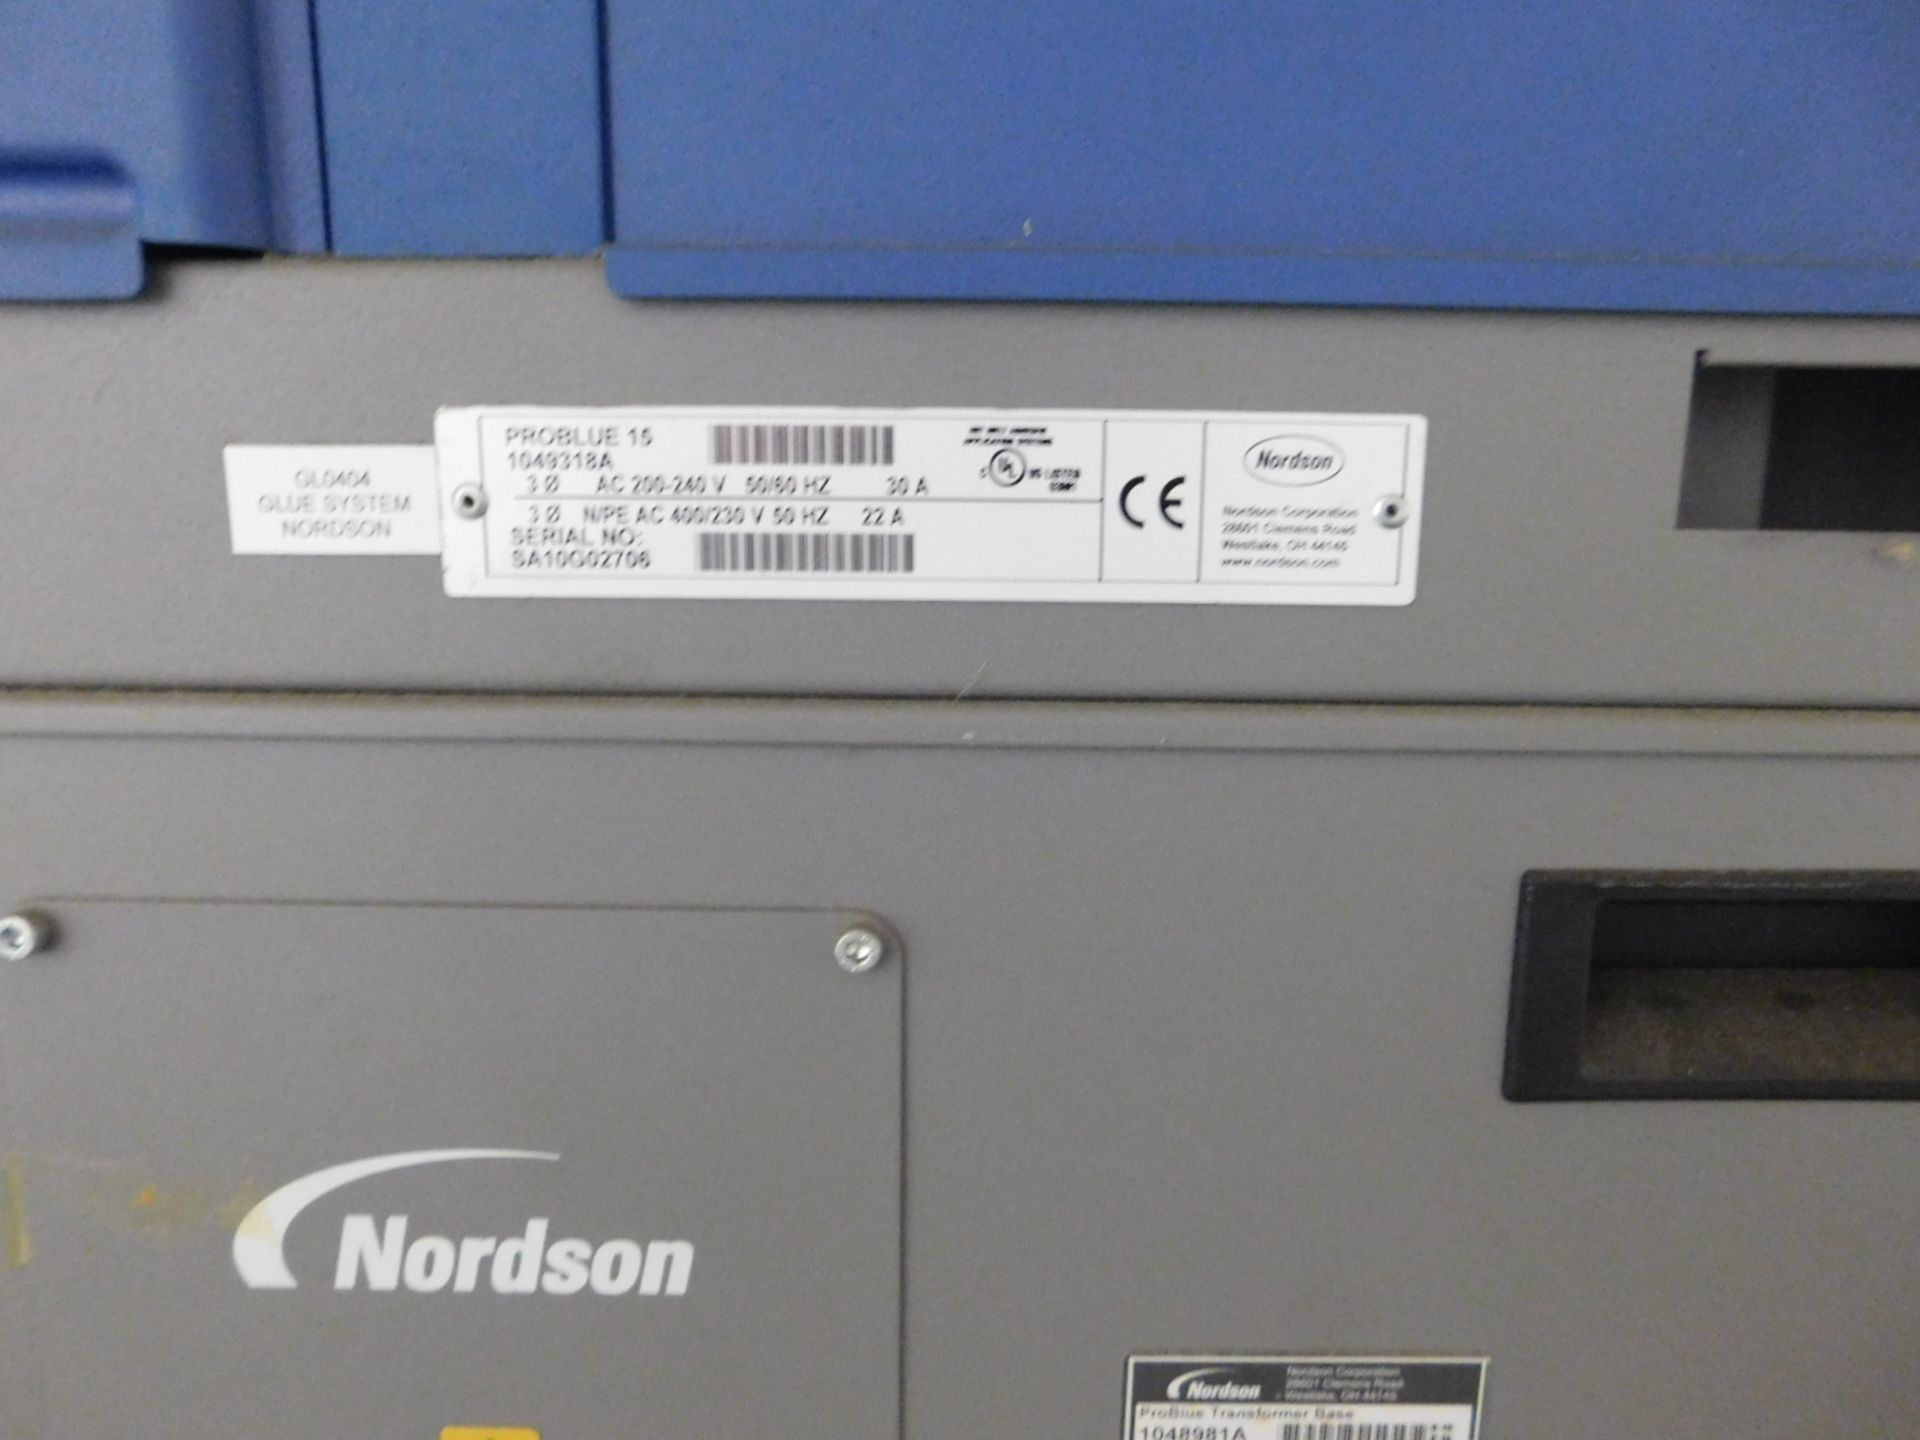 Nordson Problue 15 Adhesive Melter Sn: SA10G02706 and Problue 1048981A Transformer Sn:SA10k60677, - Image 2 of 7